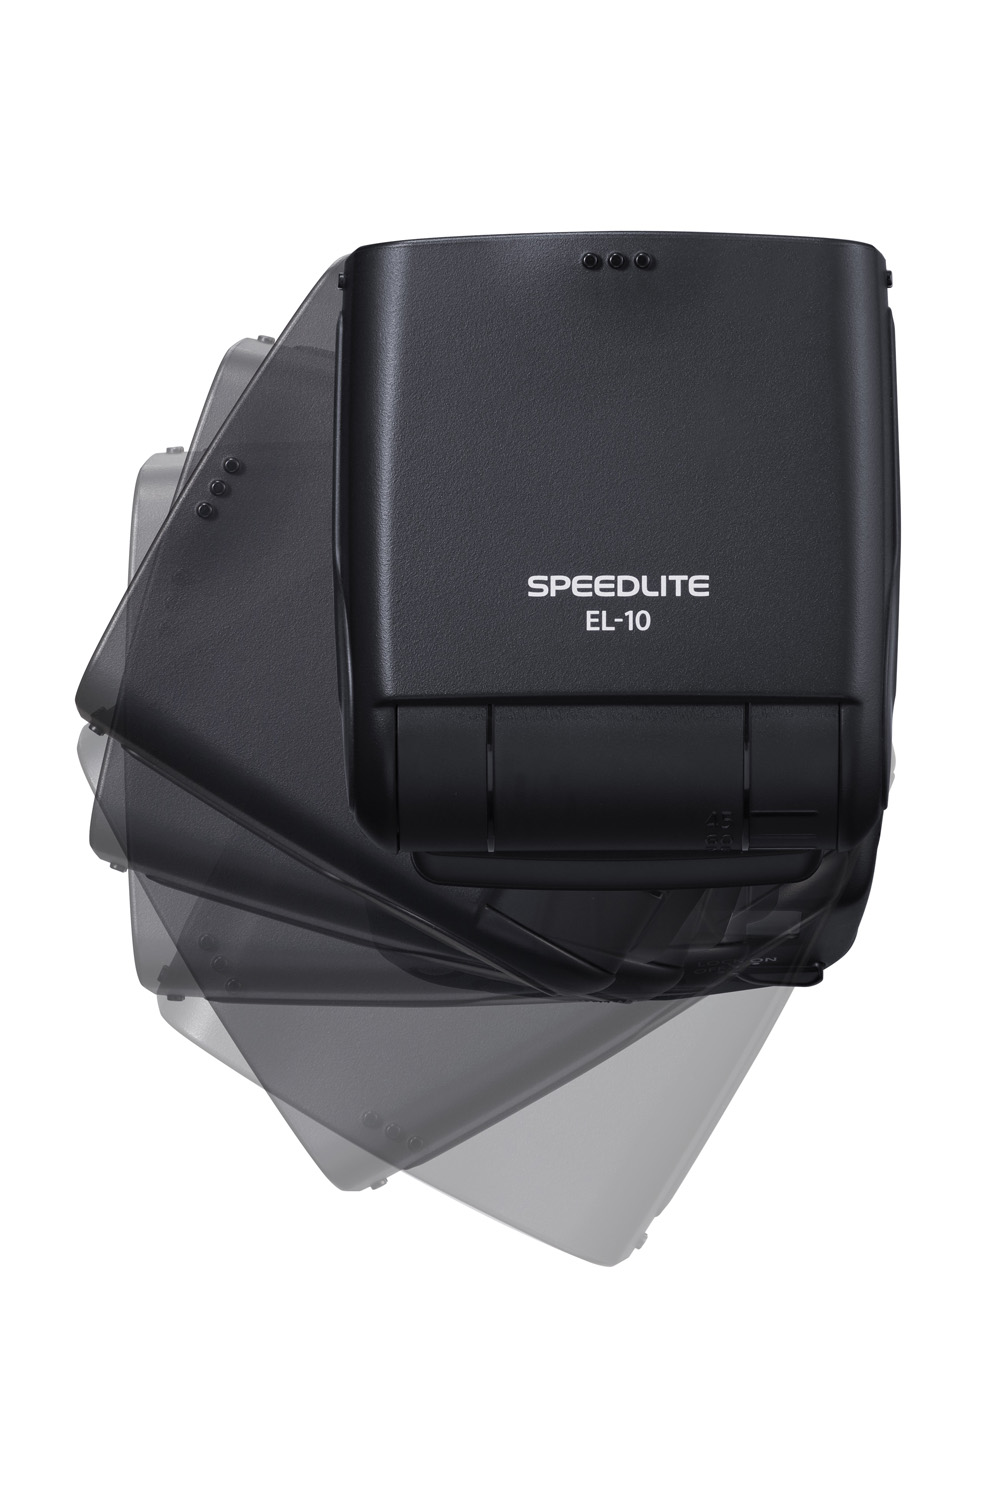 Product photo of Canon Speedlight EL-10 on white background showing swivel head range of movement